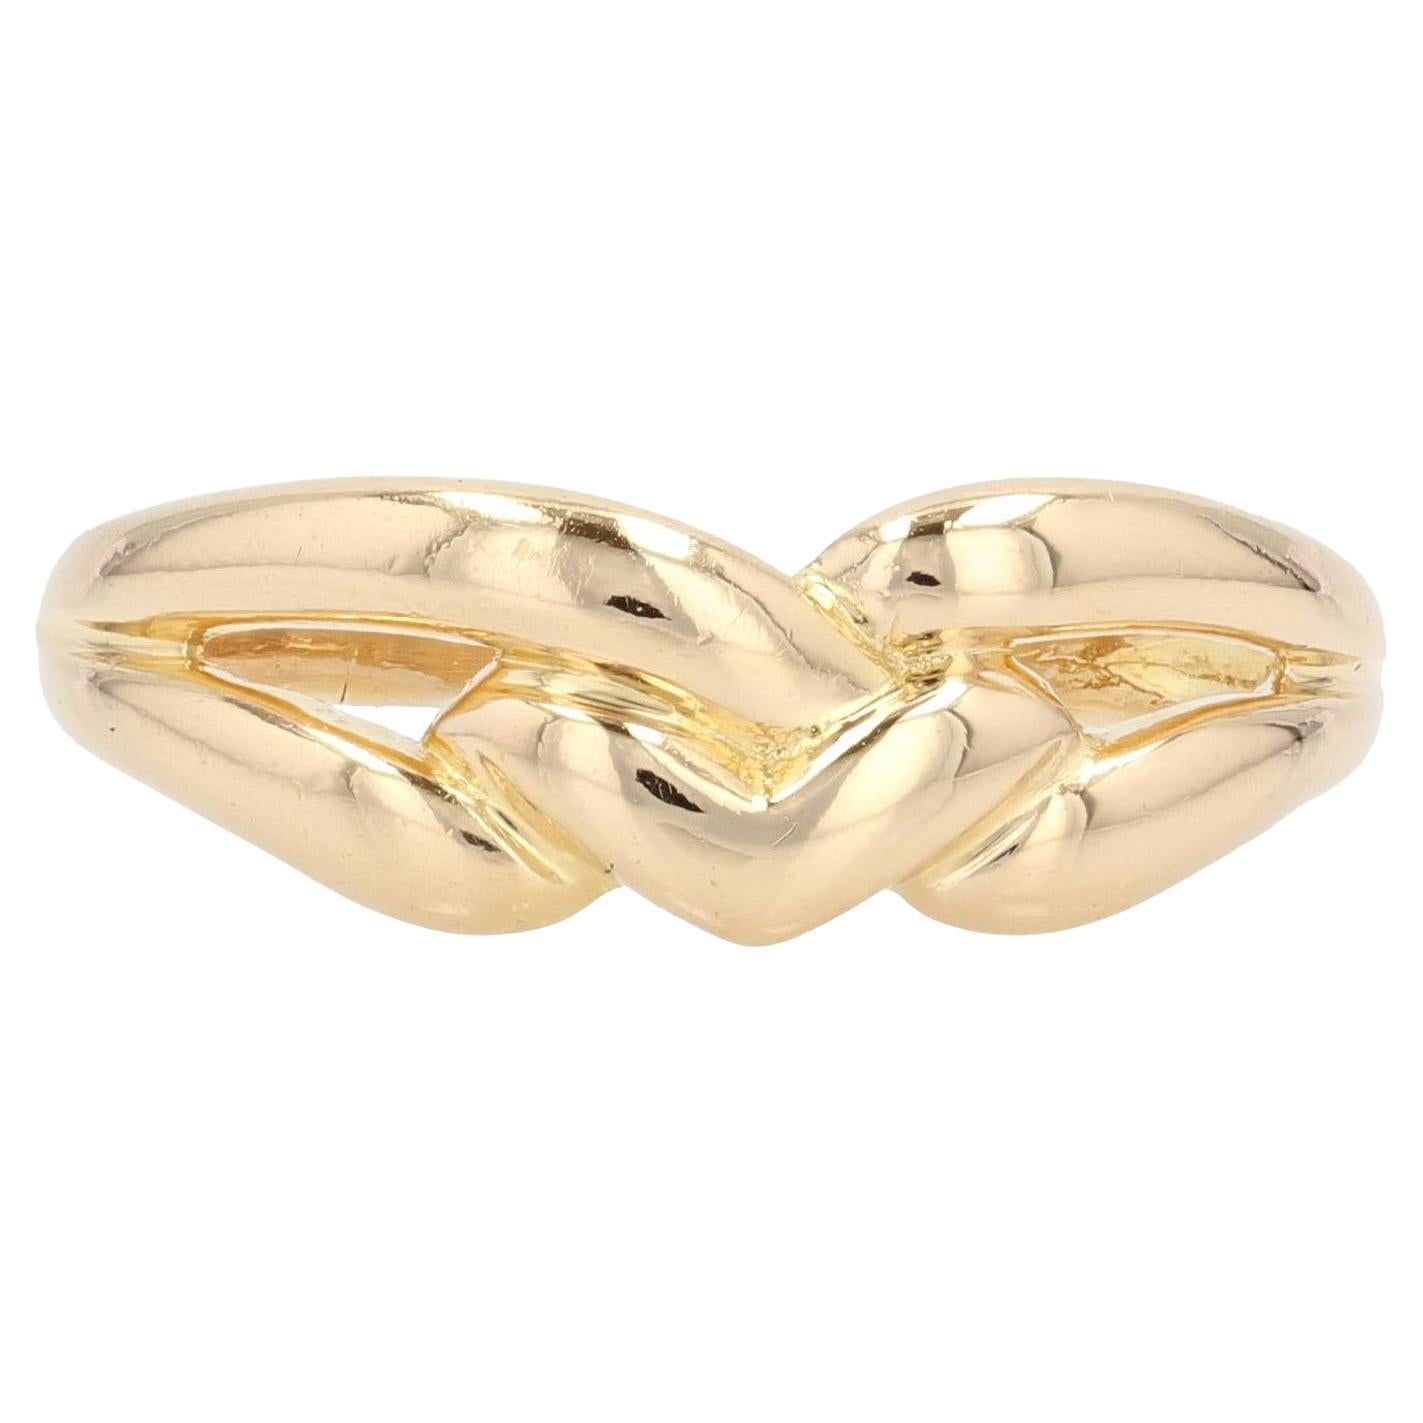 Shop Louis Vuitton Lv instinct set of 2 rings (M00513) by